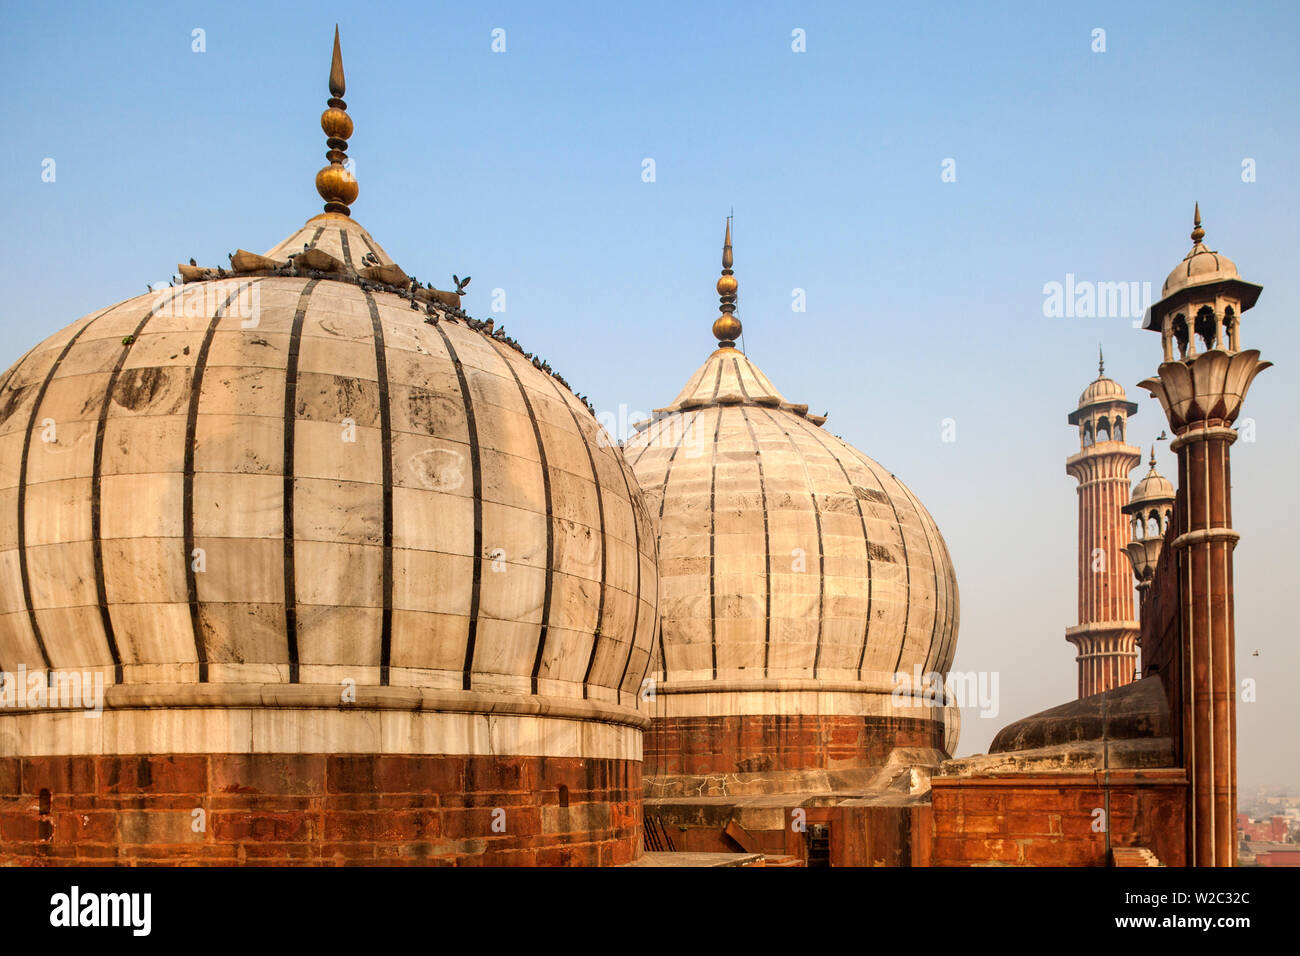 L'Inde, Delhi, Old Delhi, Jama Masjid - Mosquée Jama construit par Shah Jahan Banque D'Images